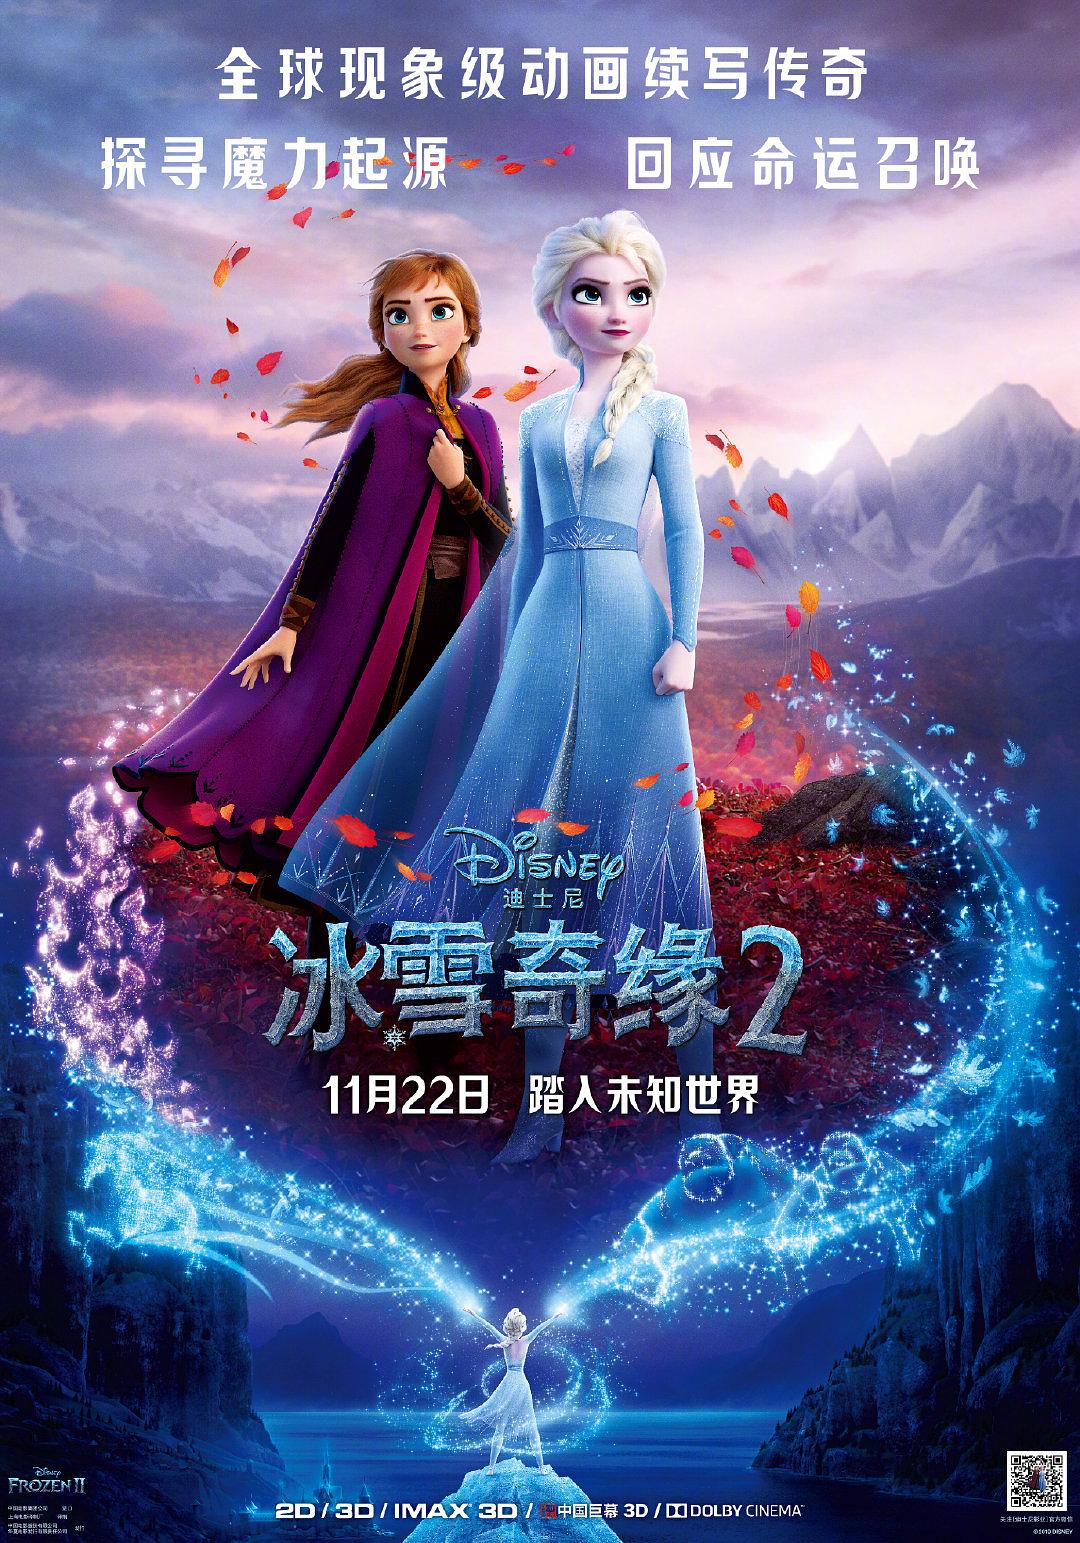 冰雪奇缘2 Frozen.II.2019.2160p.BluRay.x264.8bit.SDR.DTS-HD.MA.TrueHD.7.1.Atmos-SWTYBLZ 21.63GB-1.png